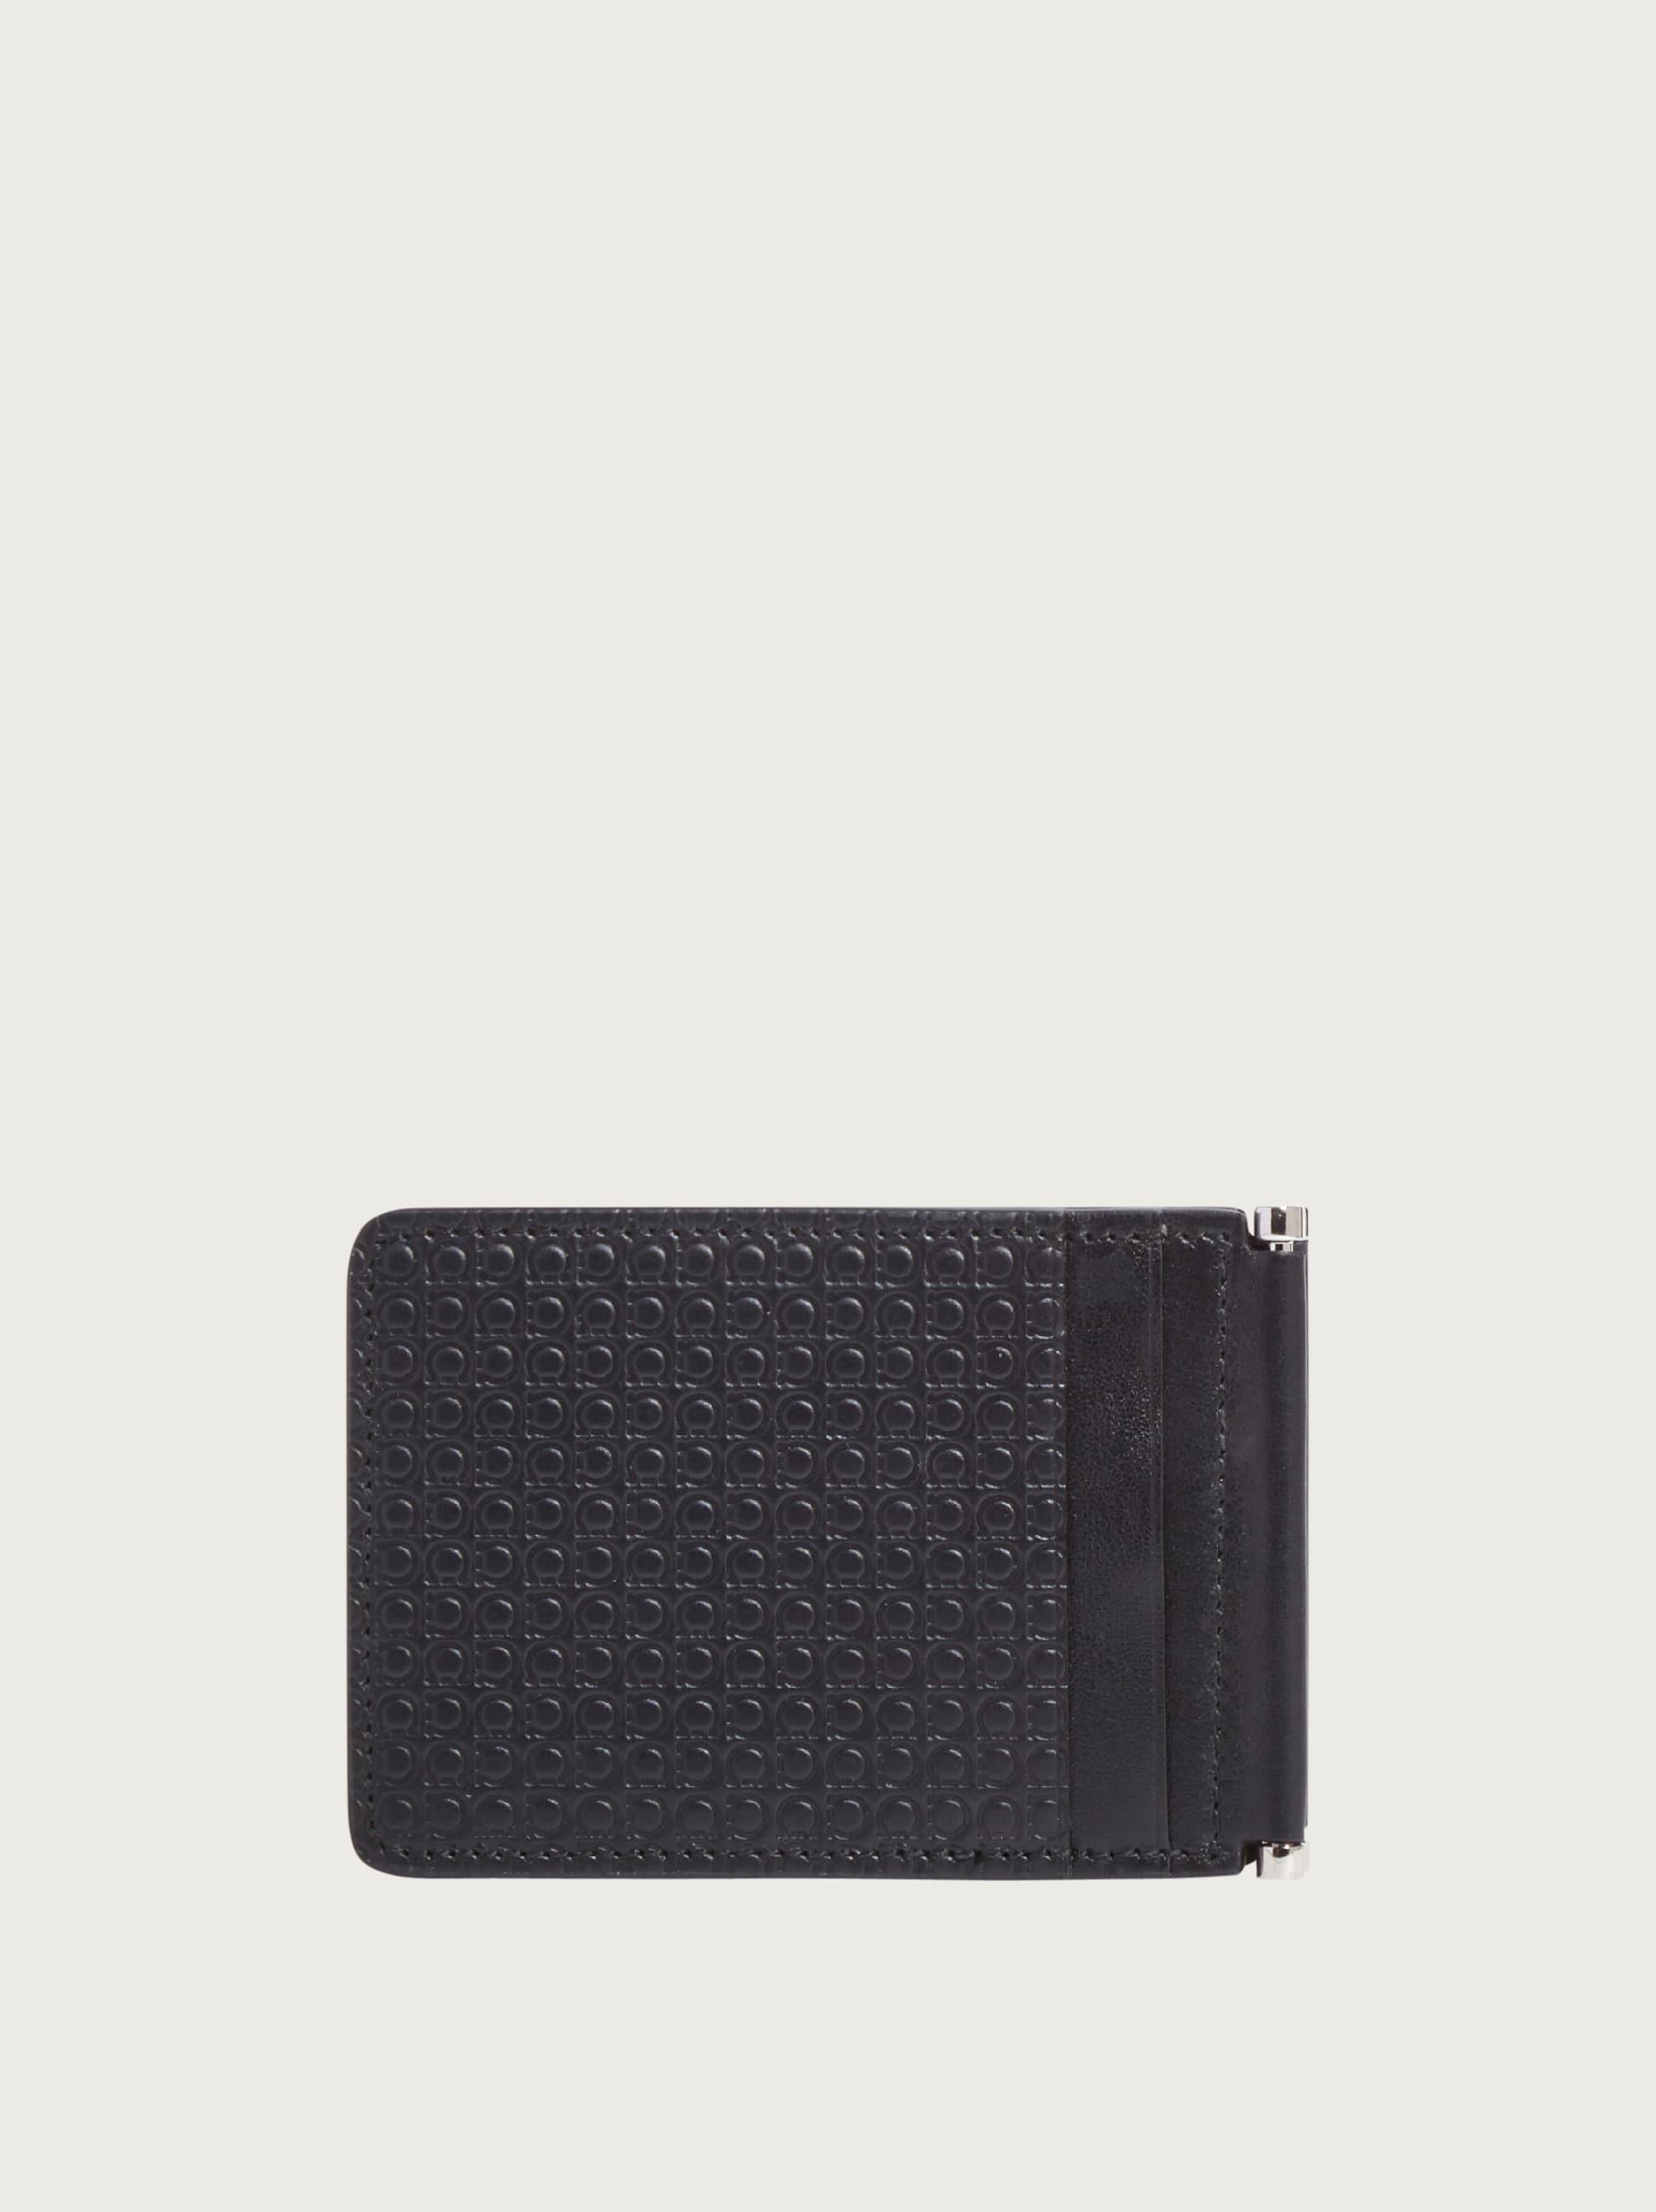 Ferragamo Leather Gancini Credit Card Holder in Black for Men - Lyst